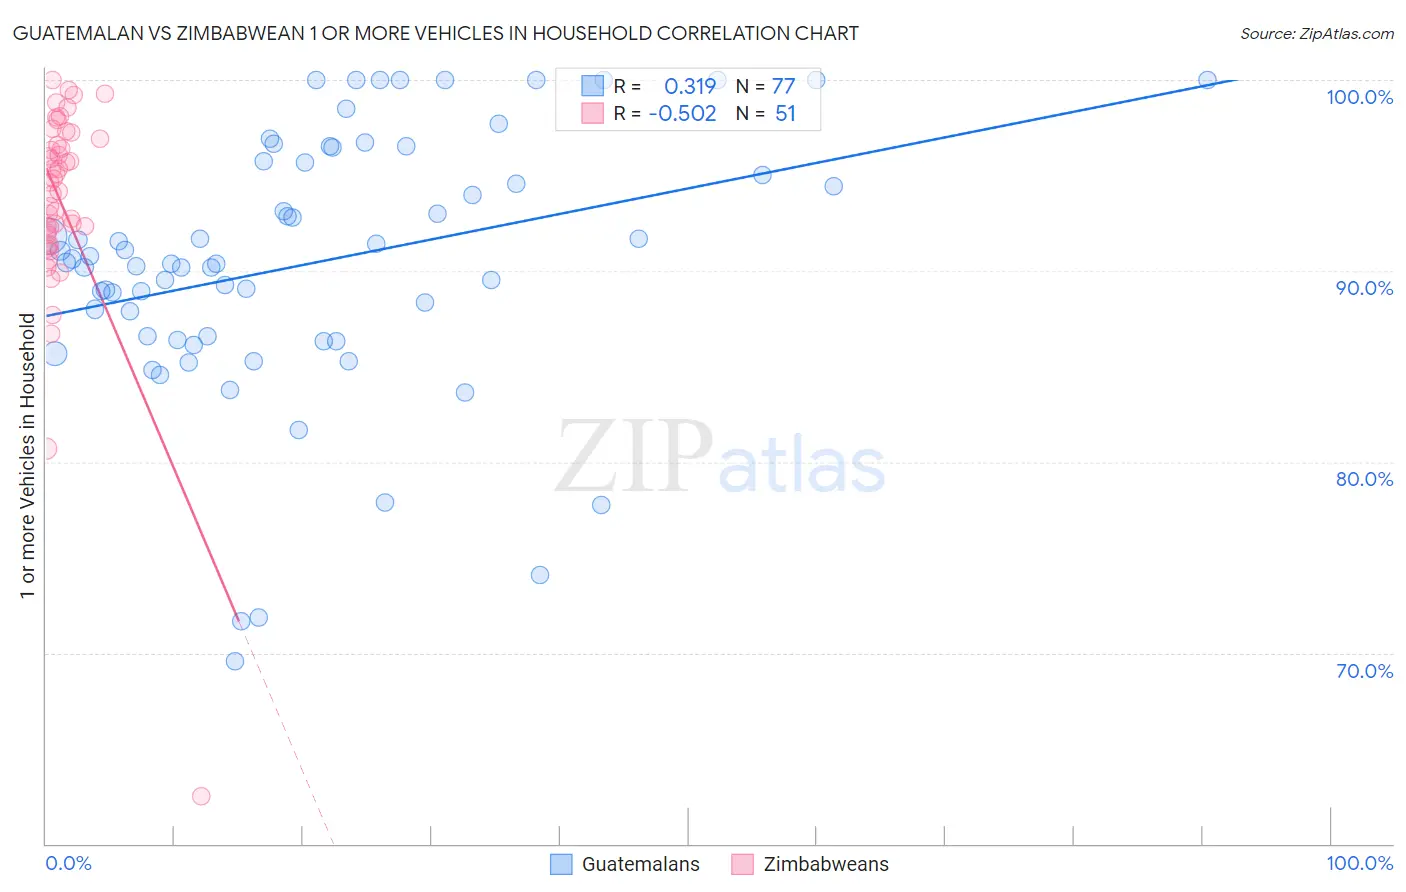 Guatemalan vs Zimbabwean 1 or more Vehicles in Household